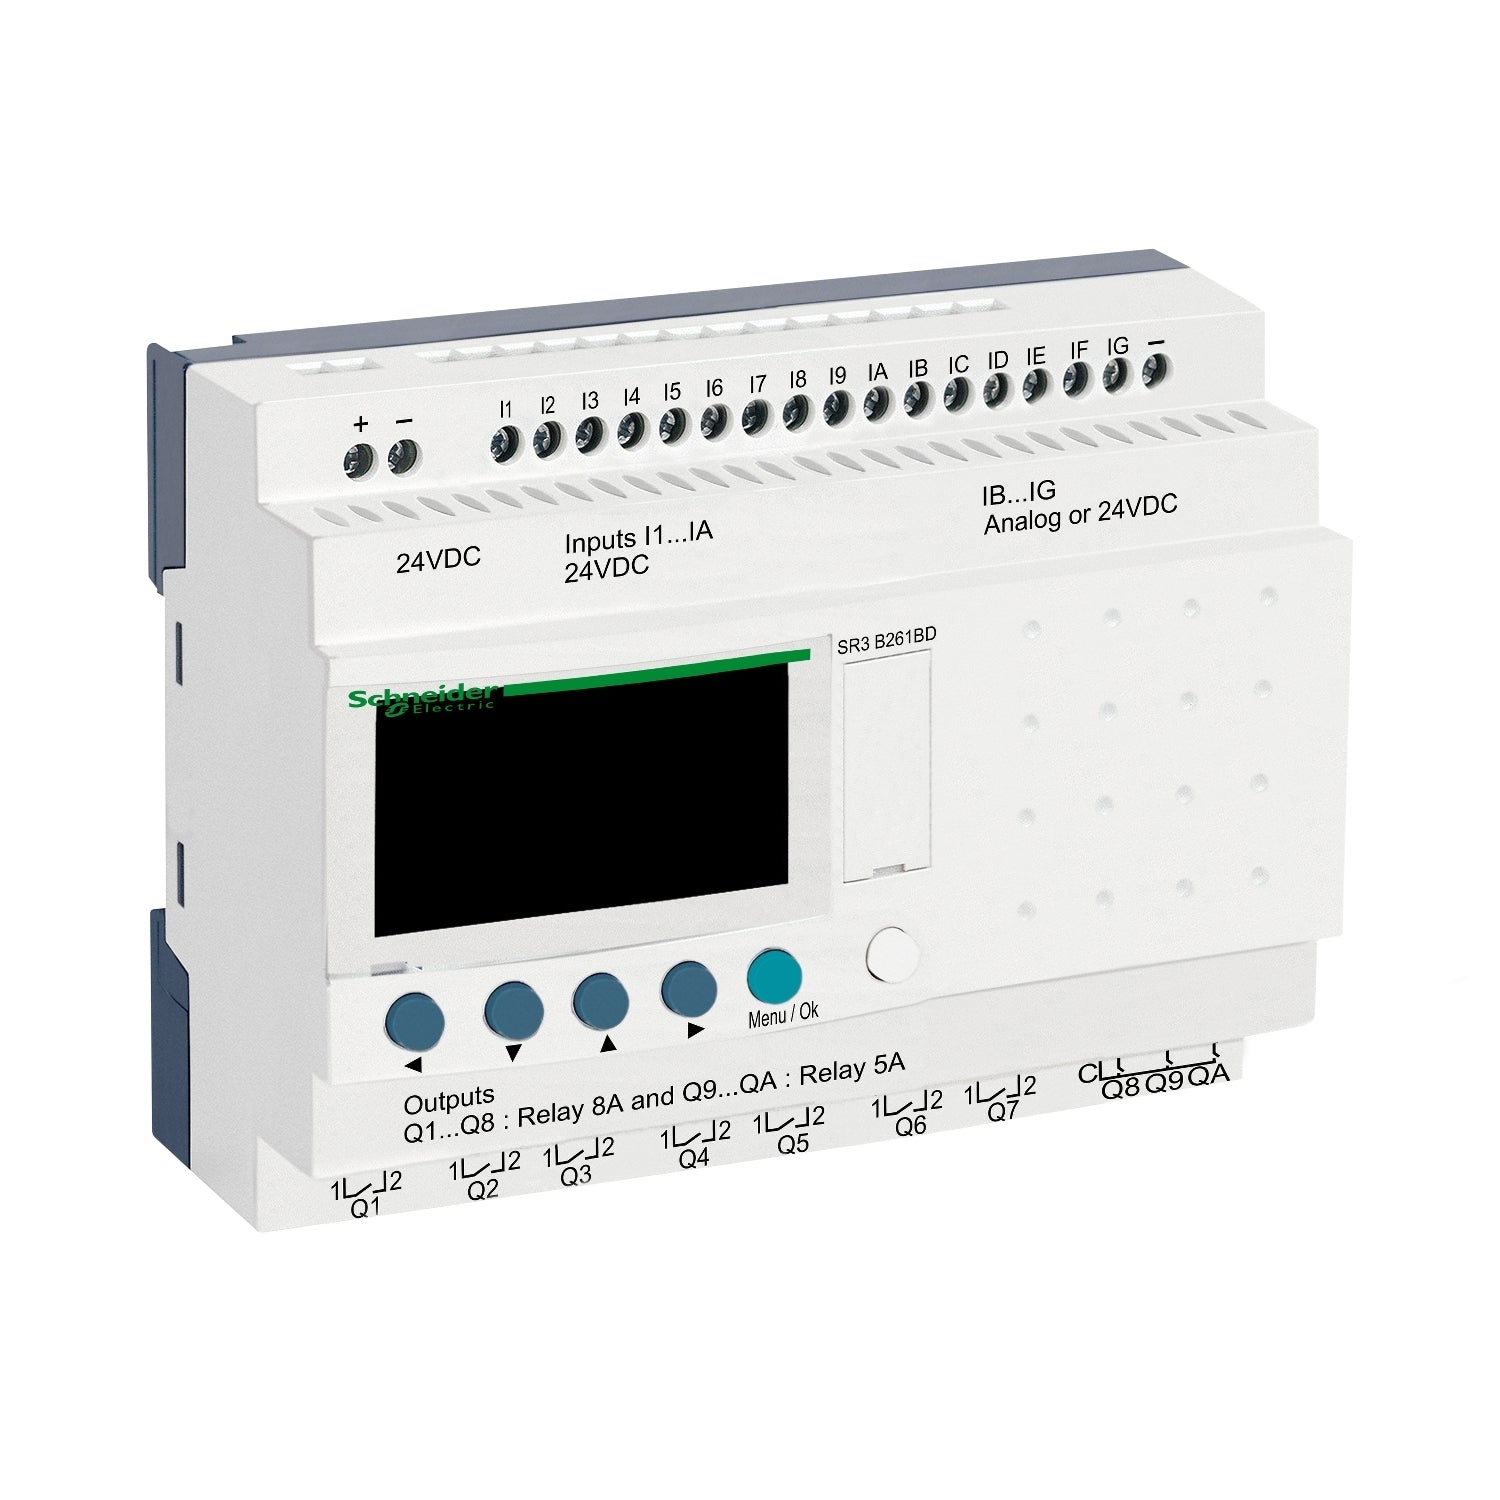 SR3B261BD | Schneider Electric | Modular smart relay